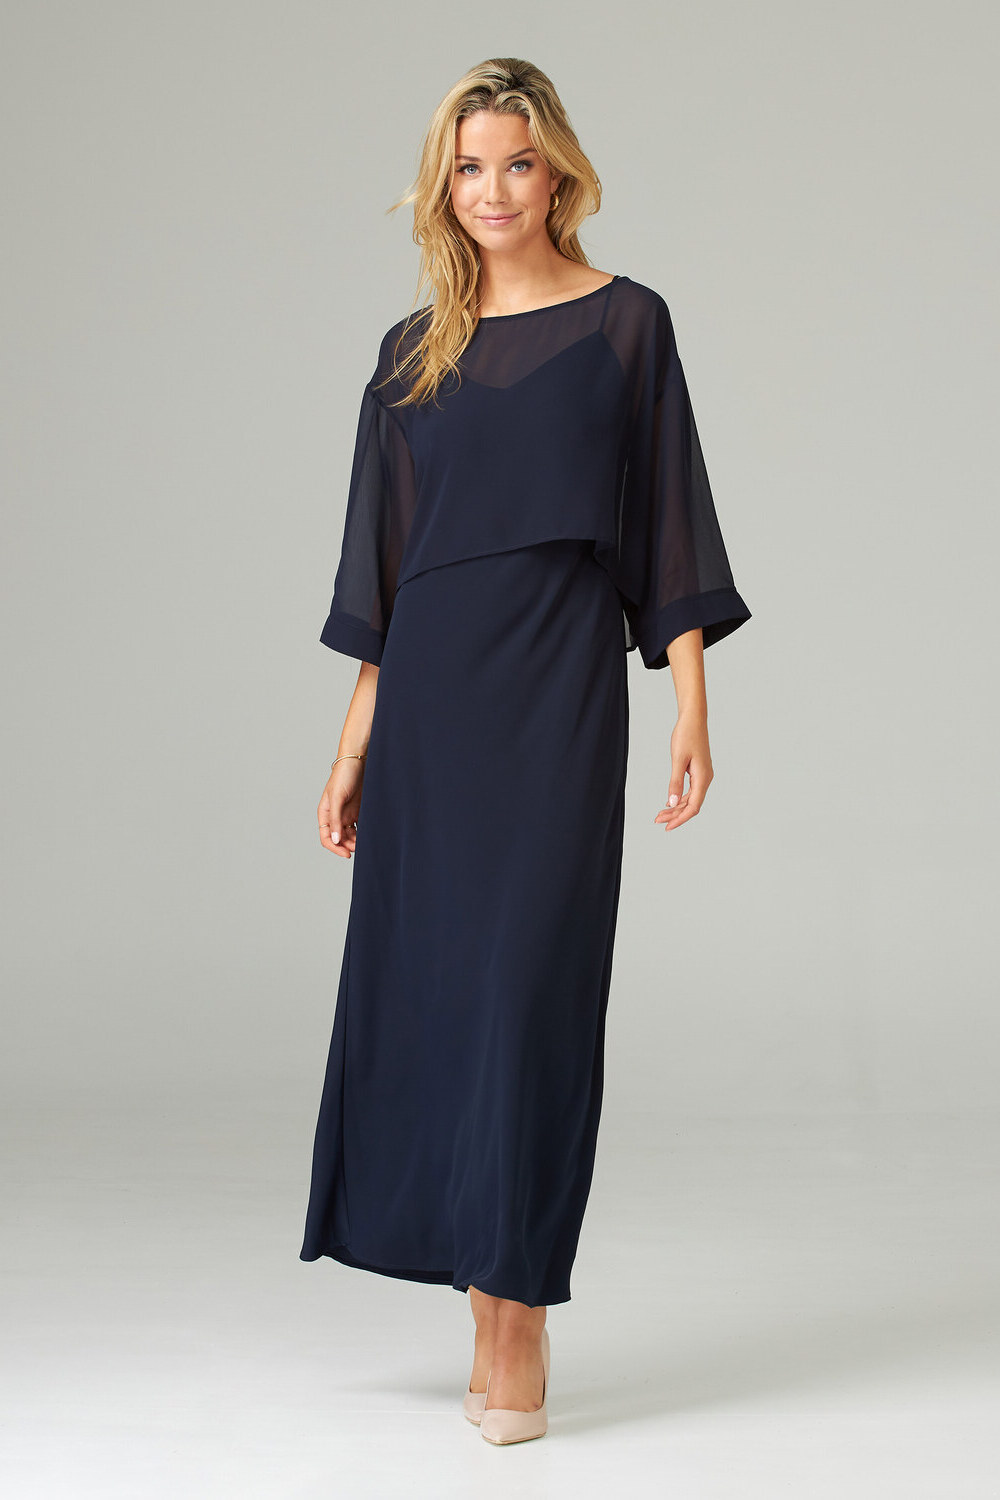 Joseph Ribkoff  Dress Style 202278. Midnight Blue 40